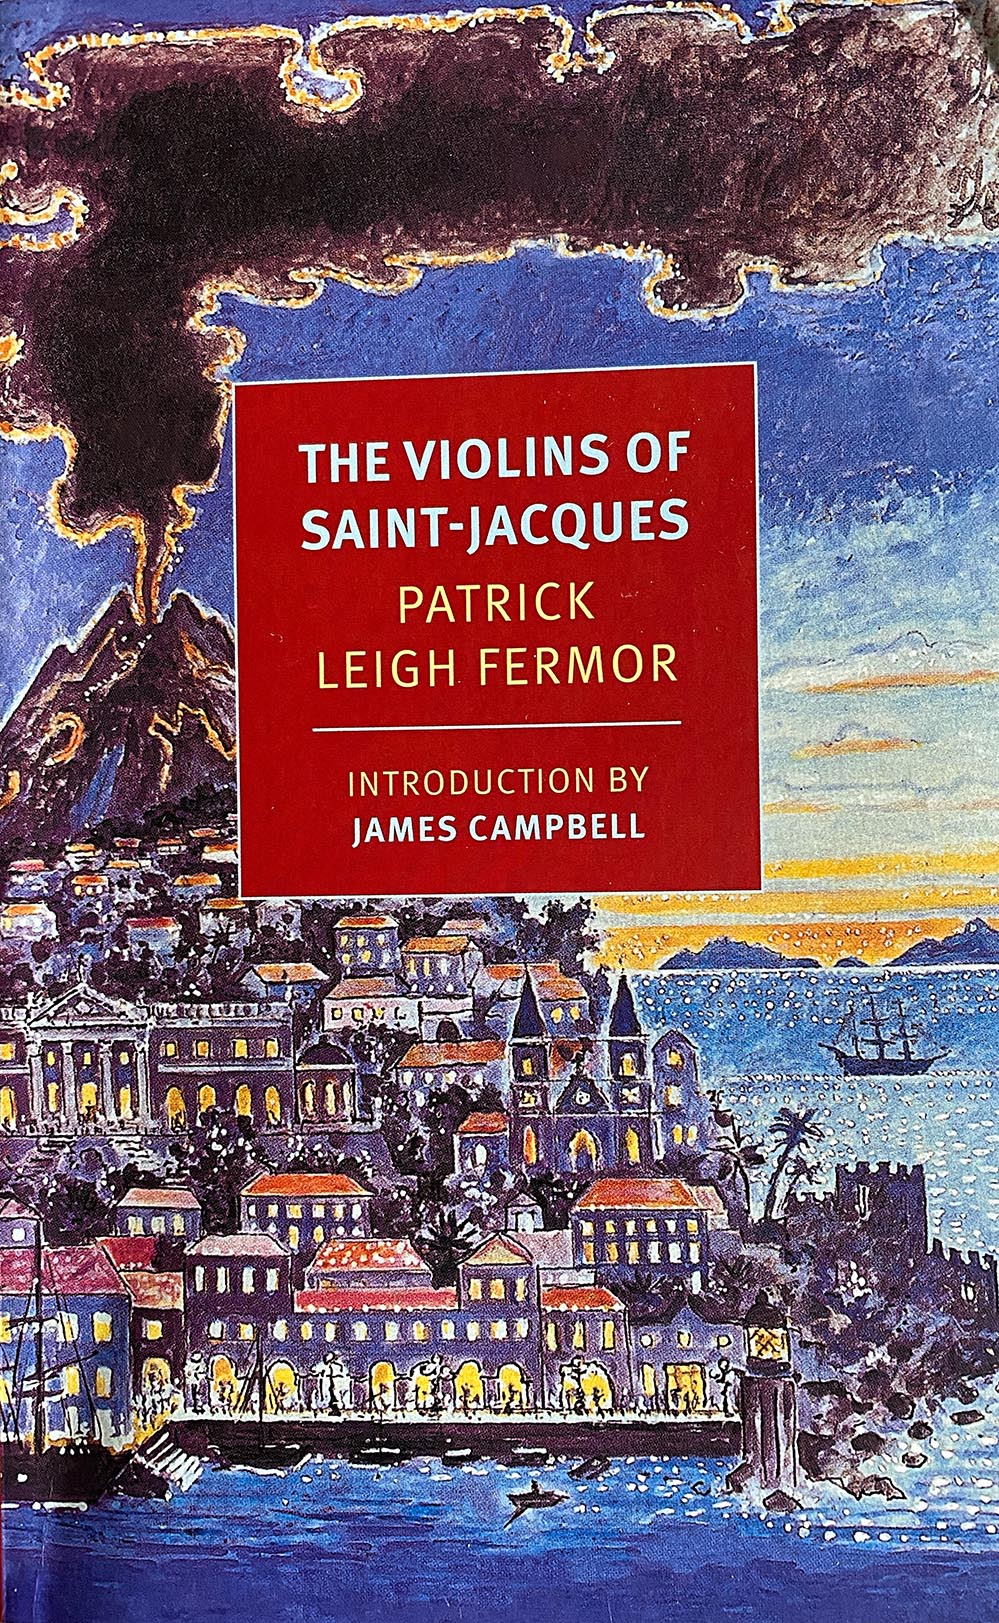 The Violins of Saint Jacques